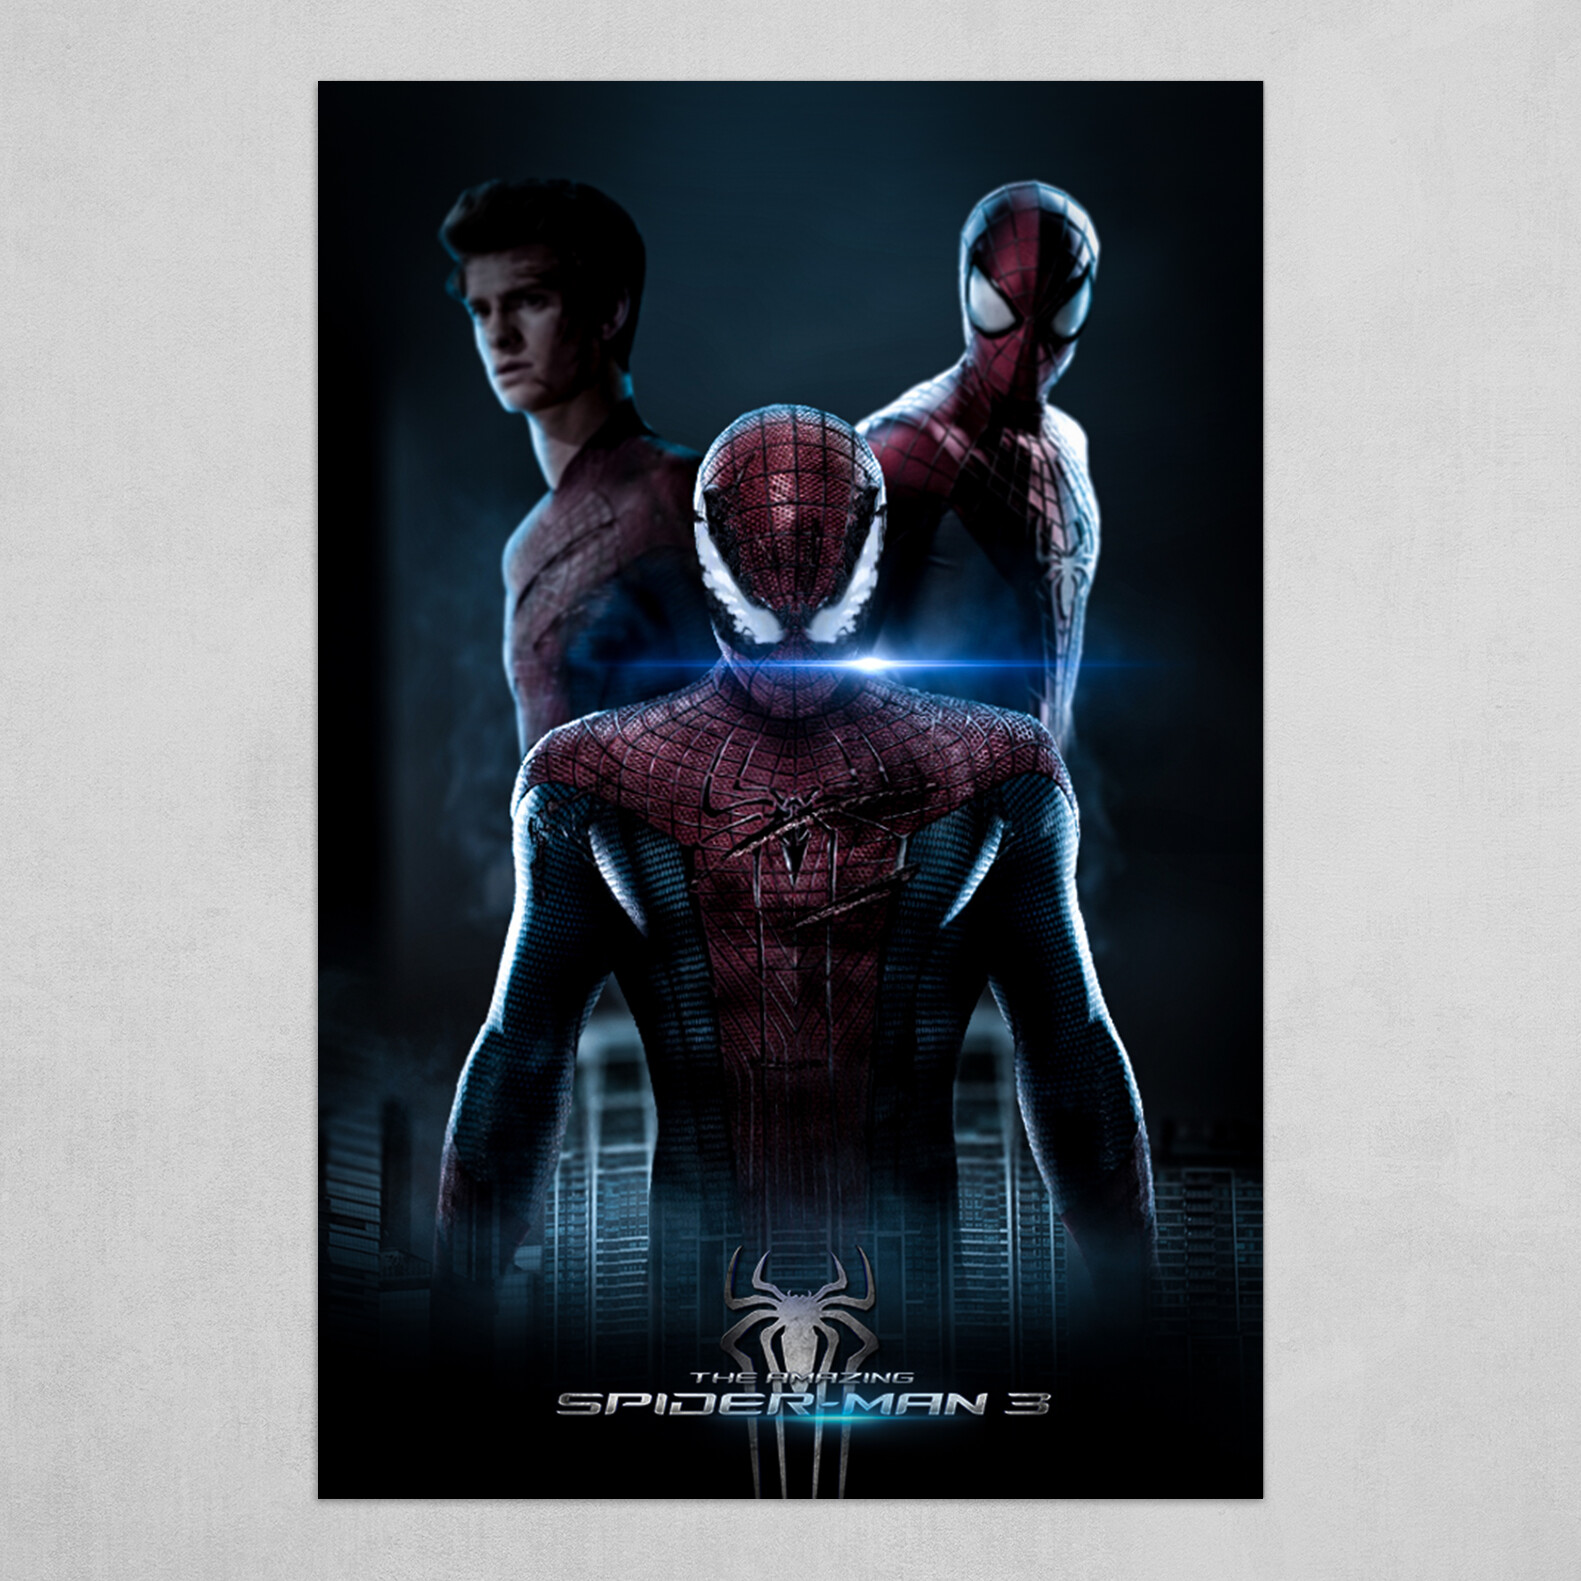 THE AMAZING SPIDER-MAN Poster Art / Vinyl Cover on Behance